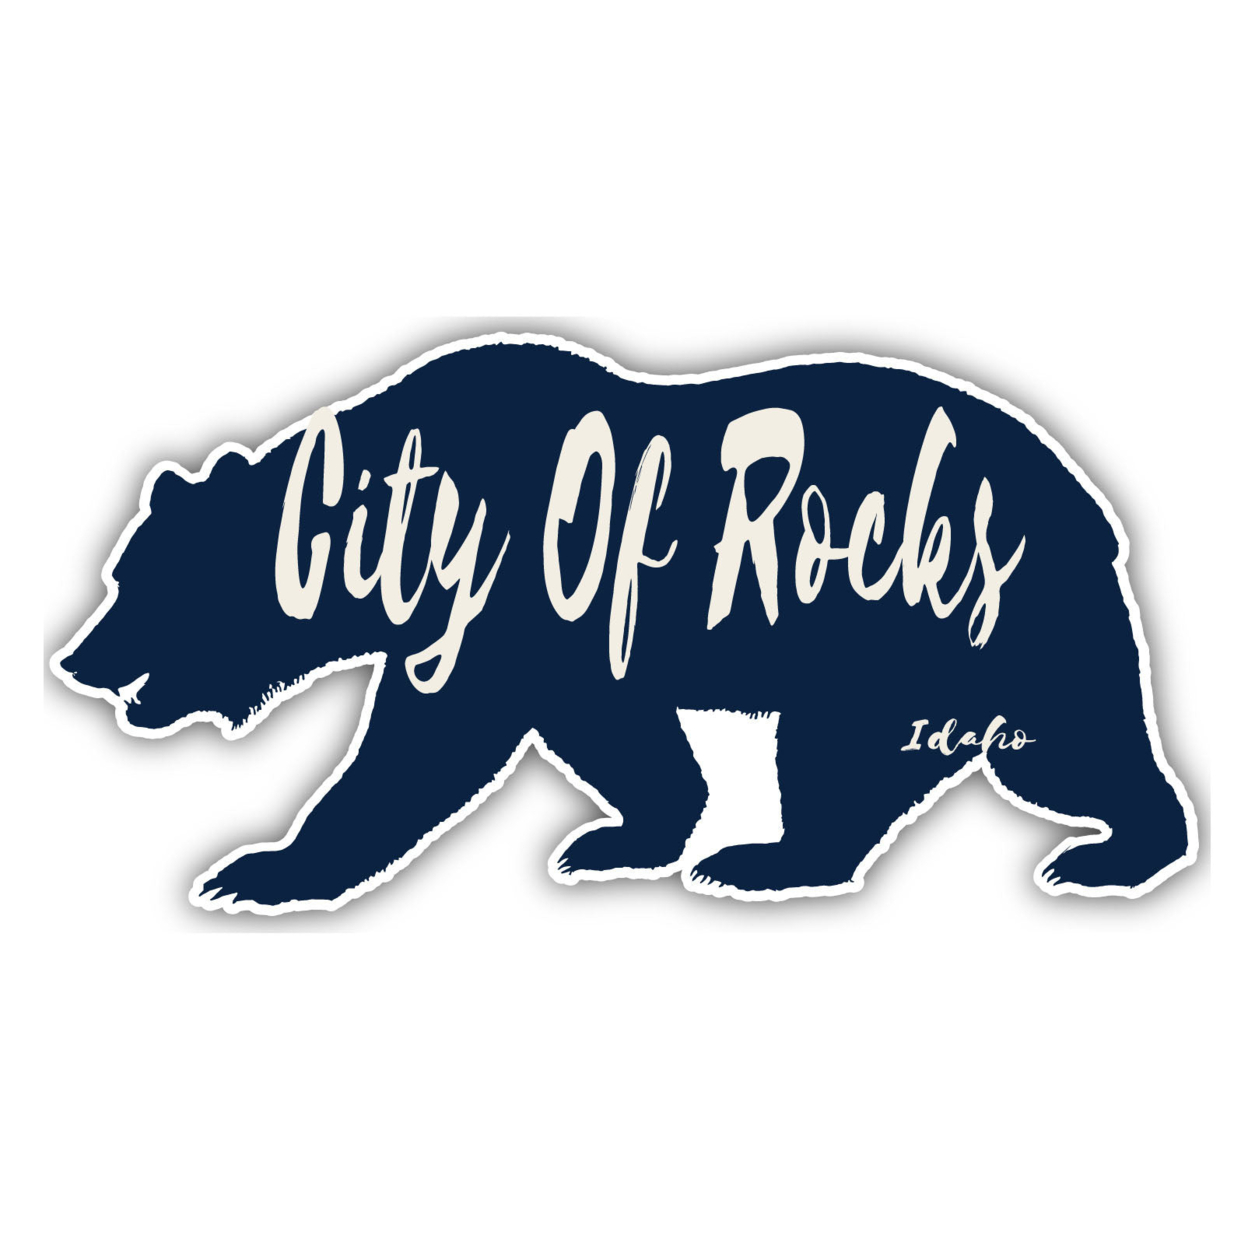 City Of Rocks Idaho Souvenir Decorative Stickers (Choose Theme And Size) - Single Unit, 2-Inch, Camp Life